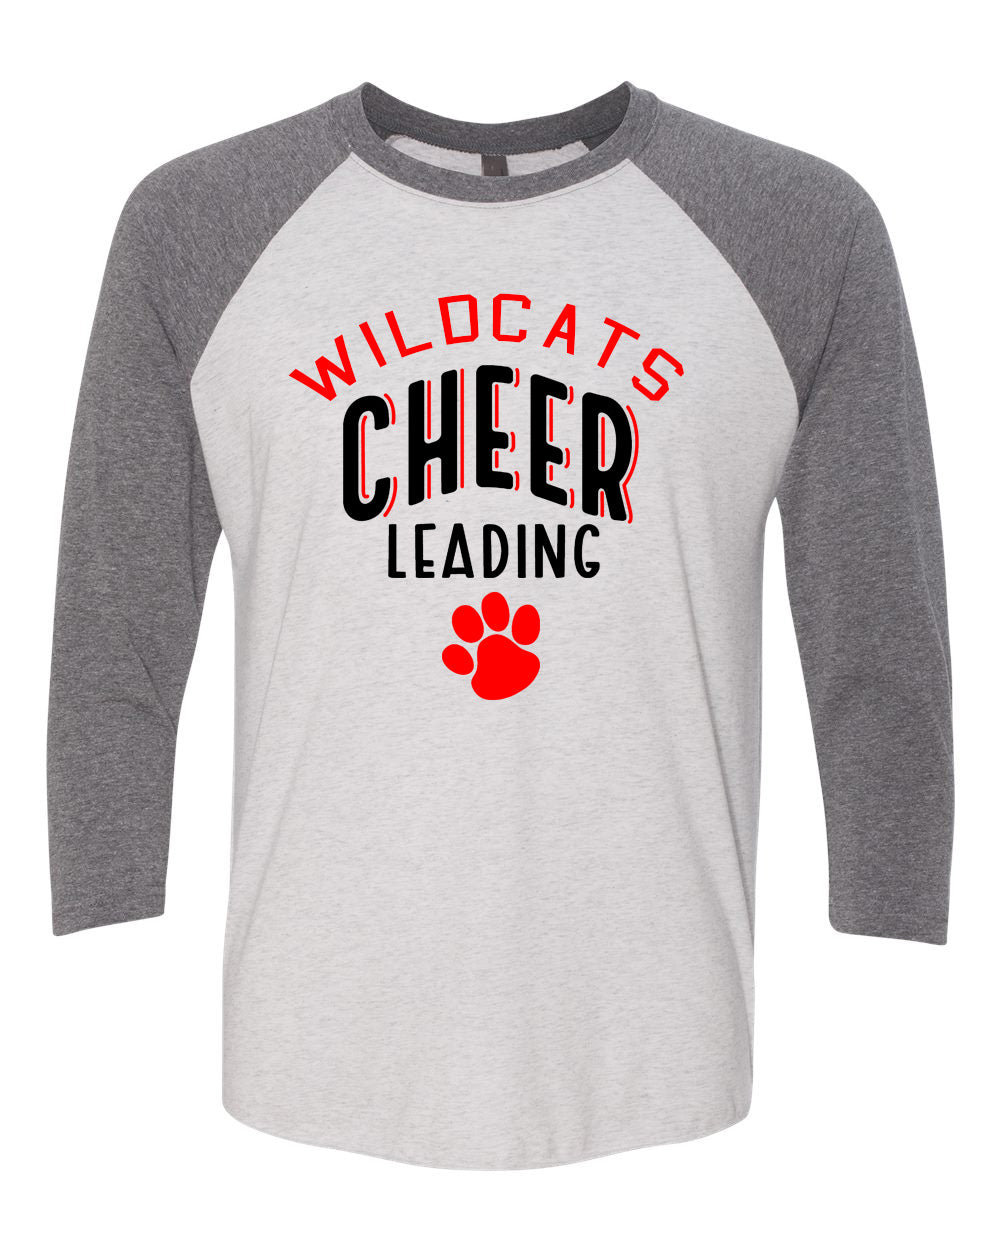 Wildcats Cheer design 5 raglan shirt